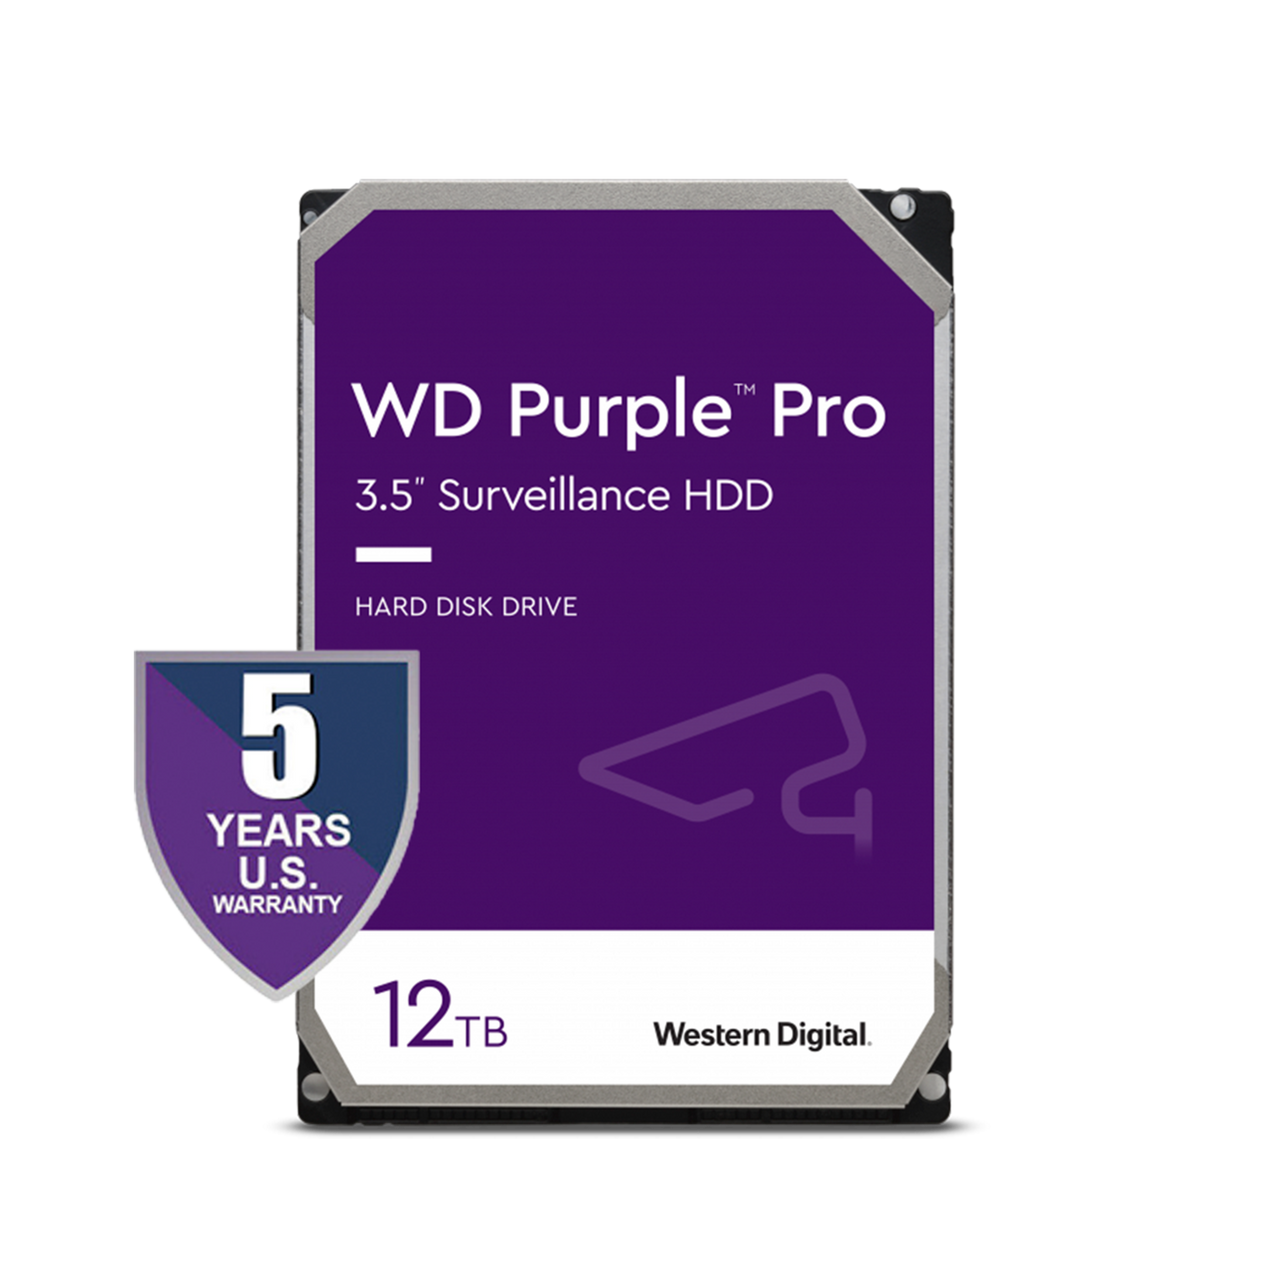 WD Purple Pro Surveillance Hard Drive 12TB Main